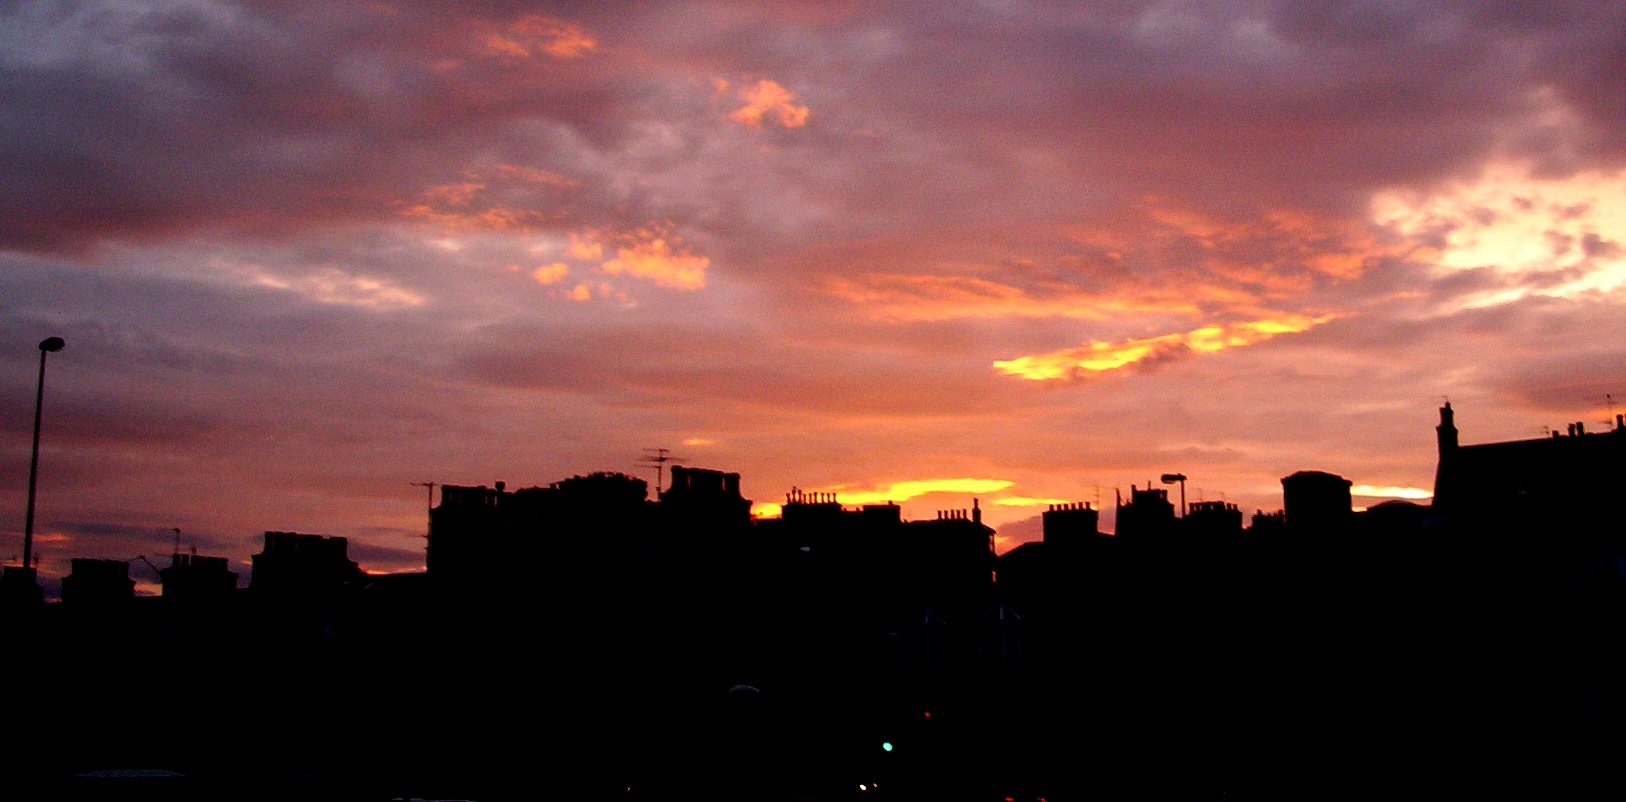 Photograph: Sunset Silhouette